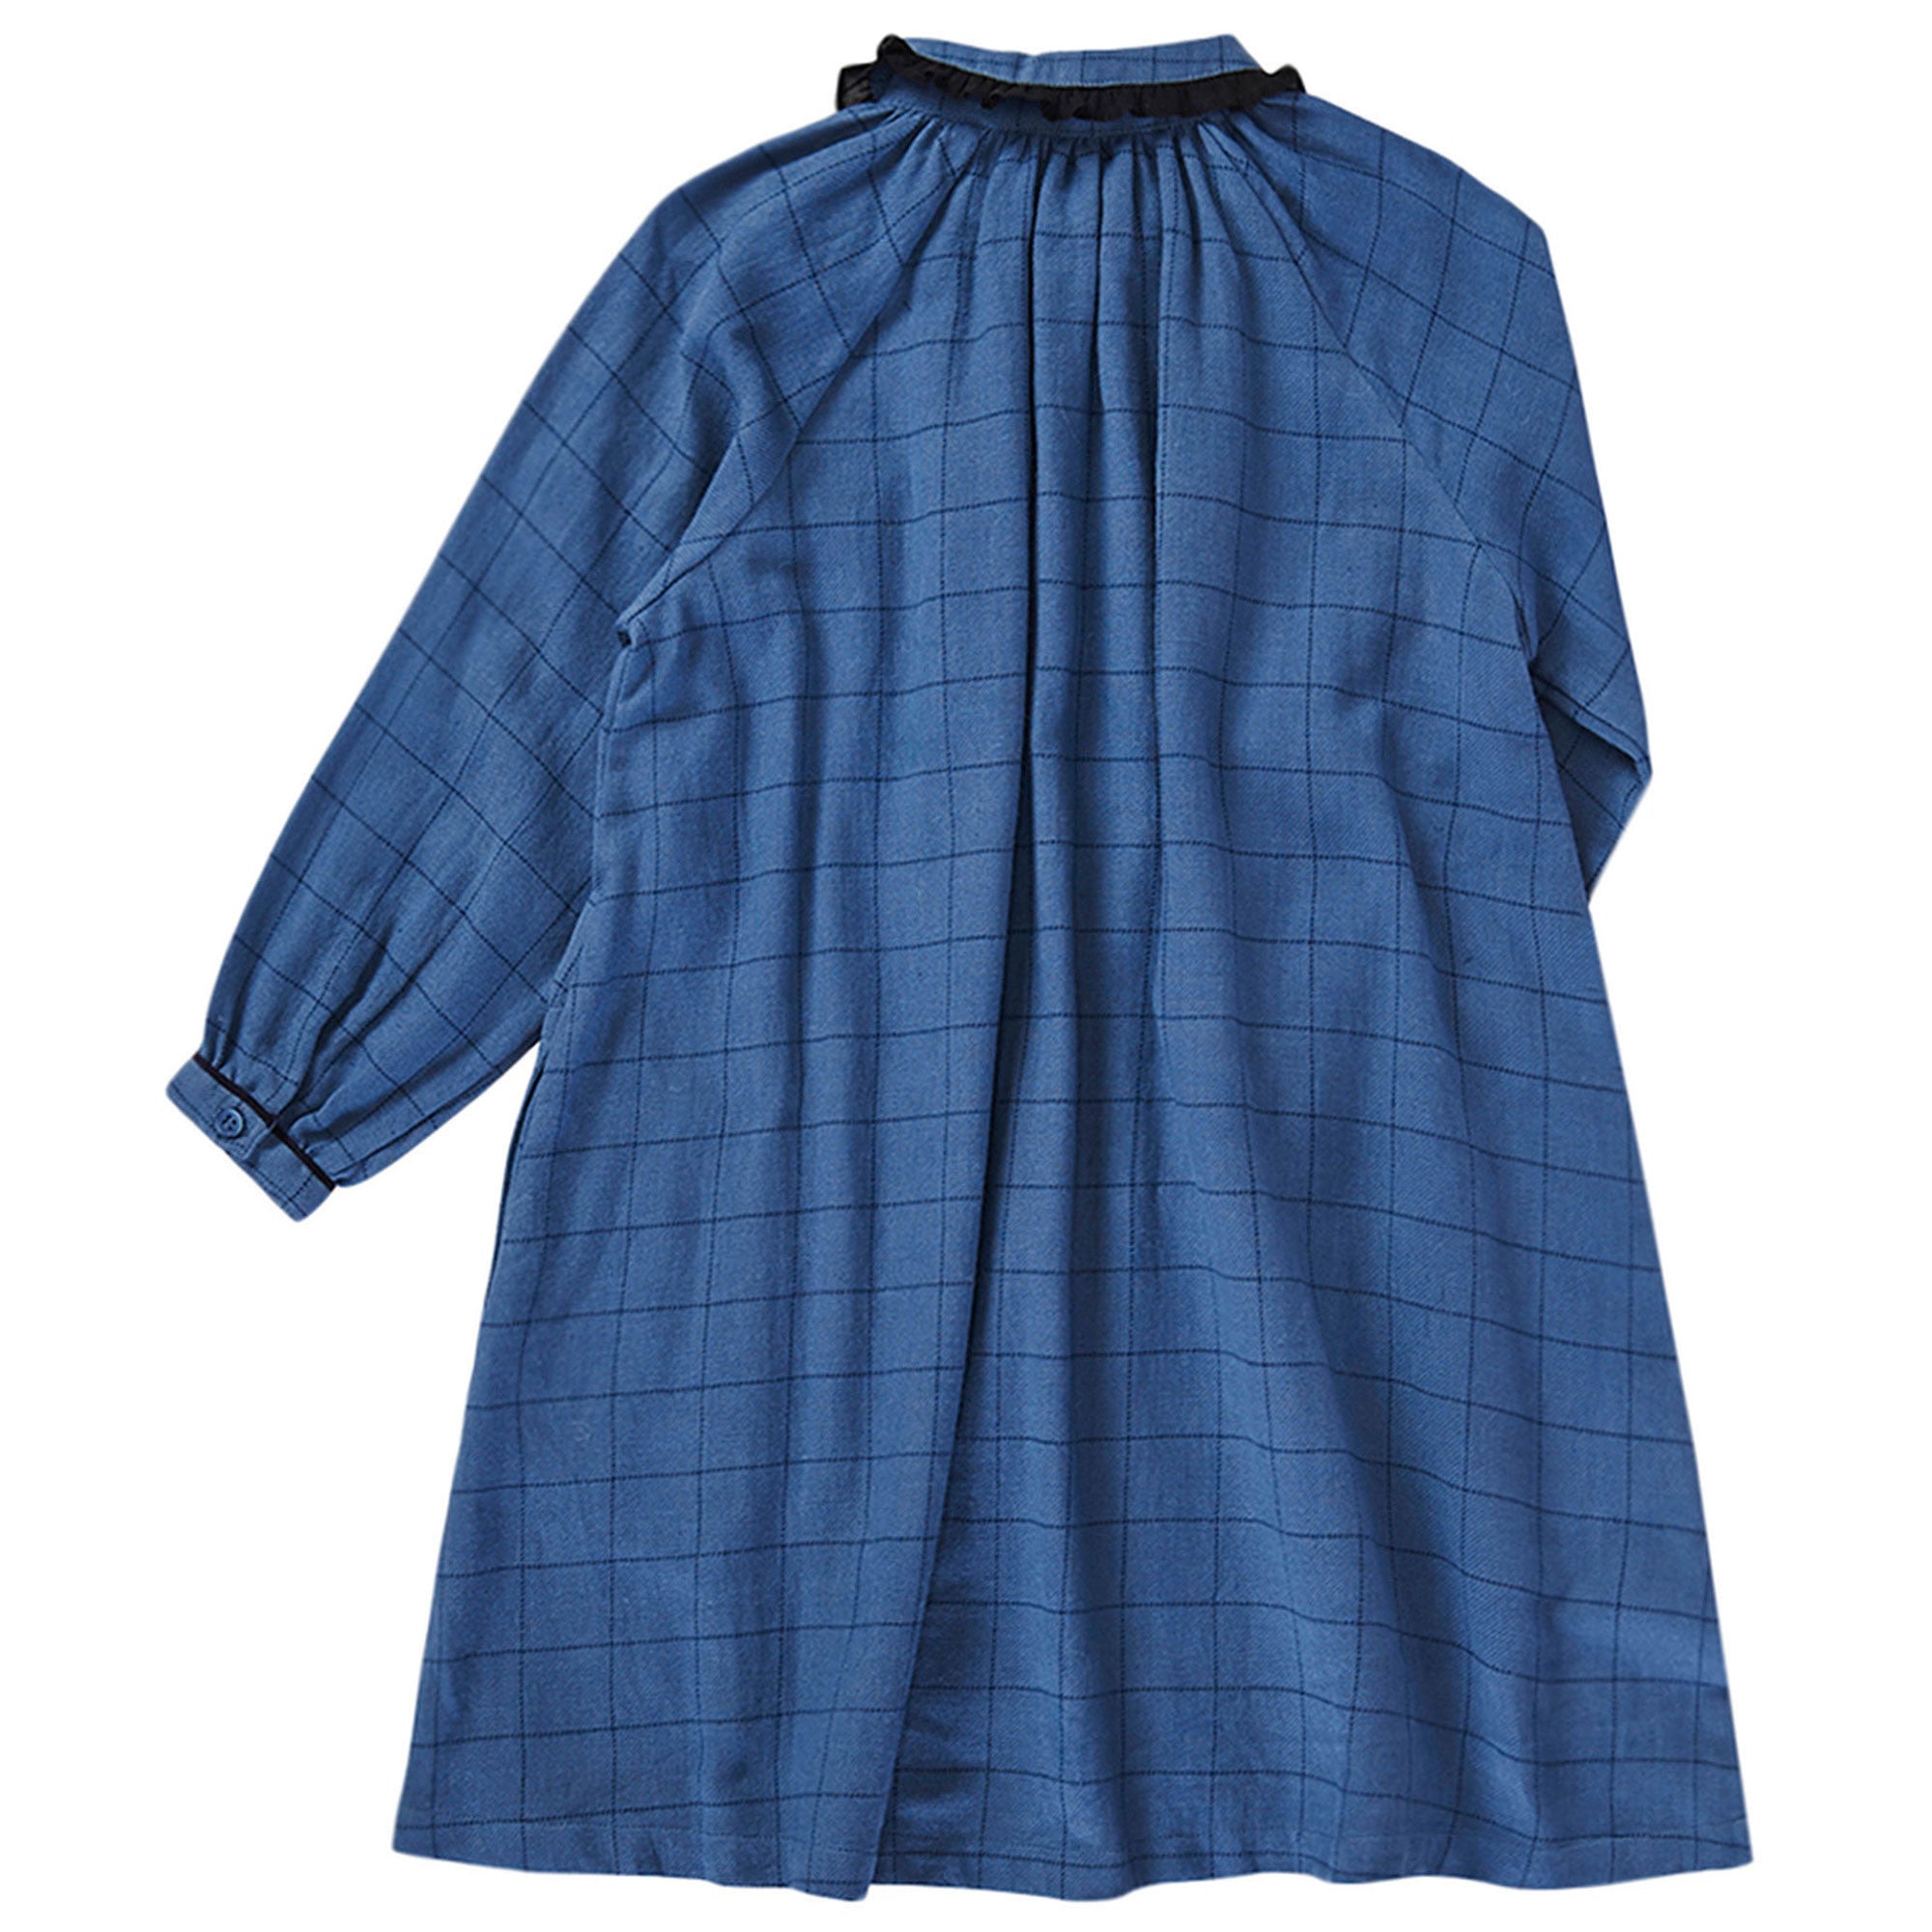 Girls Blue Check Cotton Woven Dress - CÉMAROSE | Children's Fashion Store - 2